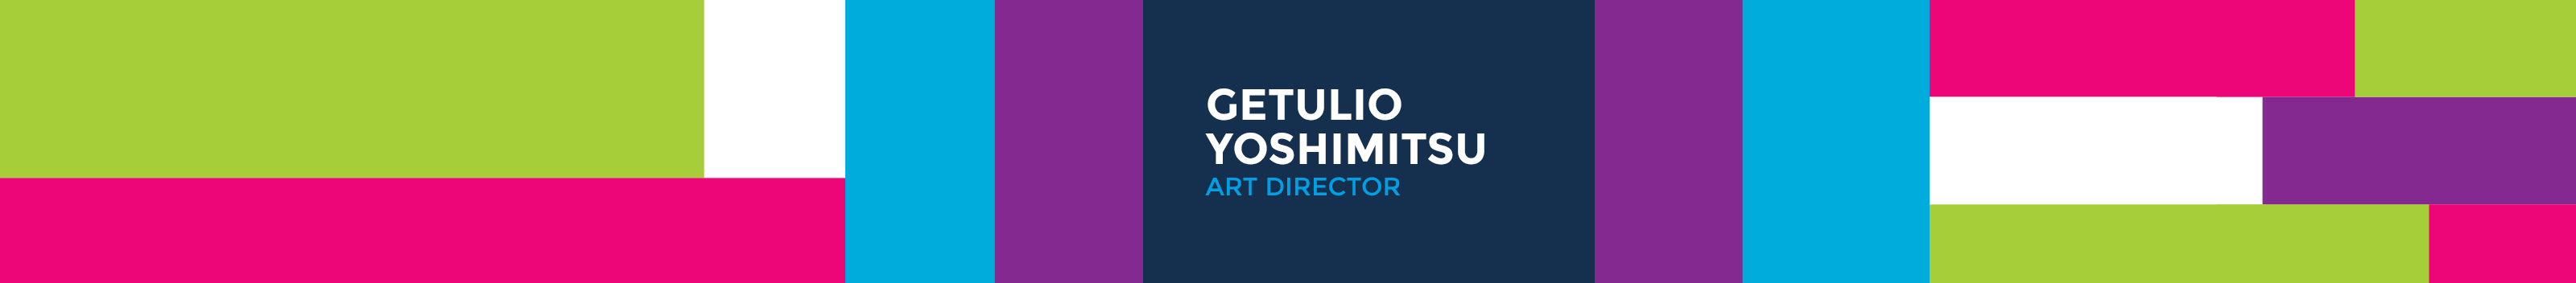 Bannière de profil de Getulio Yoshimitsu